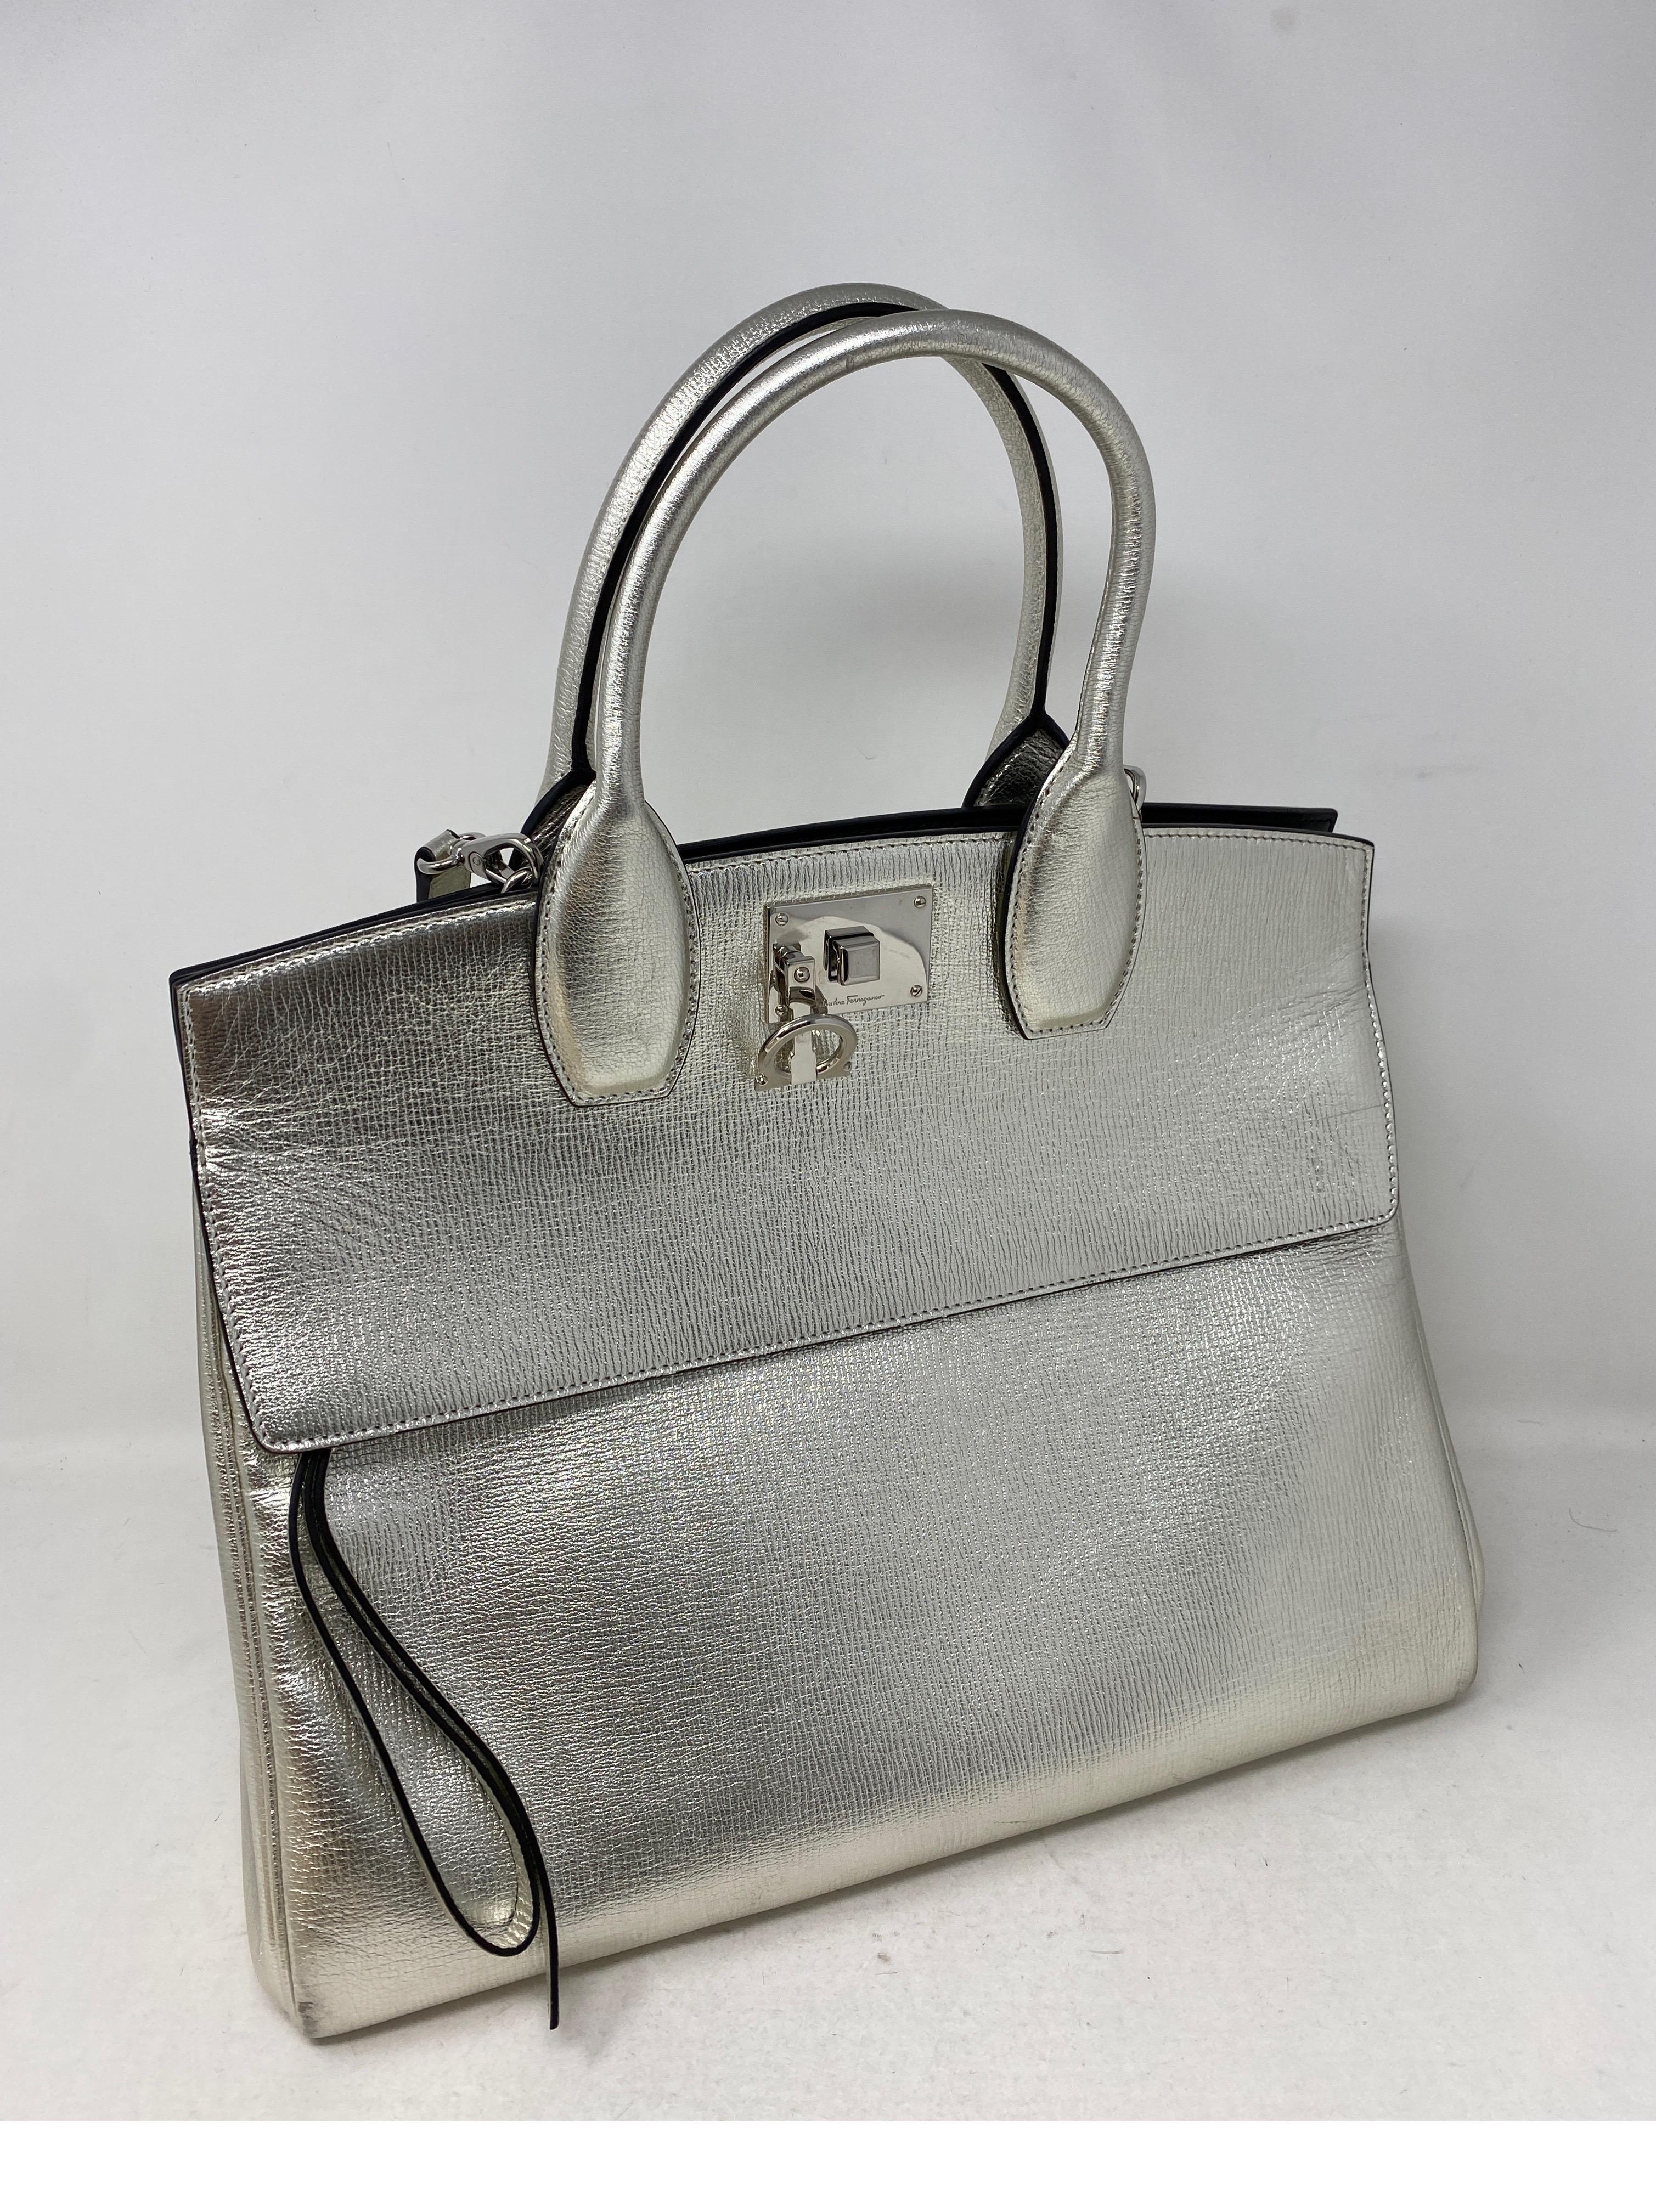 Salvatore Ferragamo Silver Leather Tote Bag. Includes silver leather strap. Excellent condition. All metallic silver leather. Black leather interior. Guaranteed authentic. 